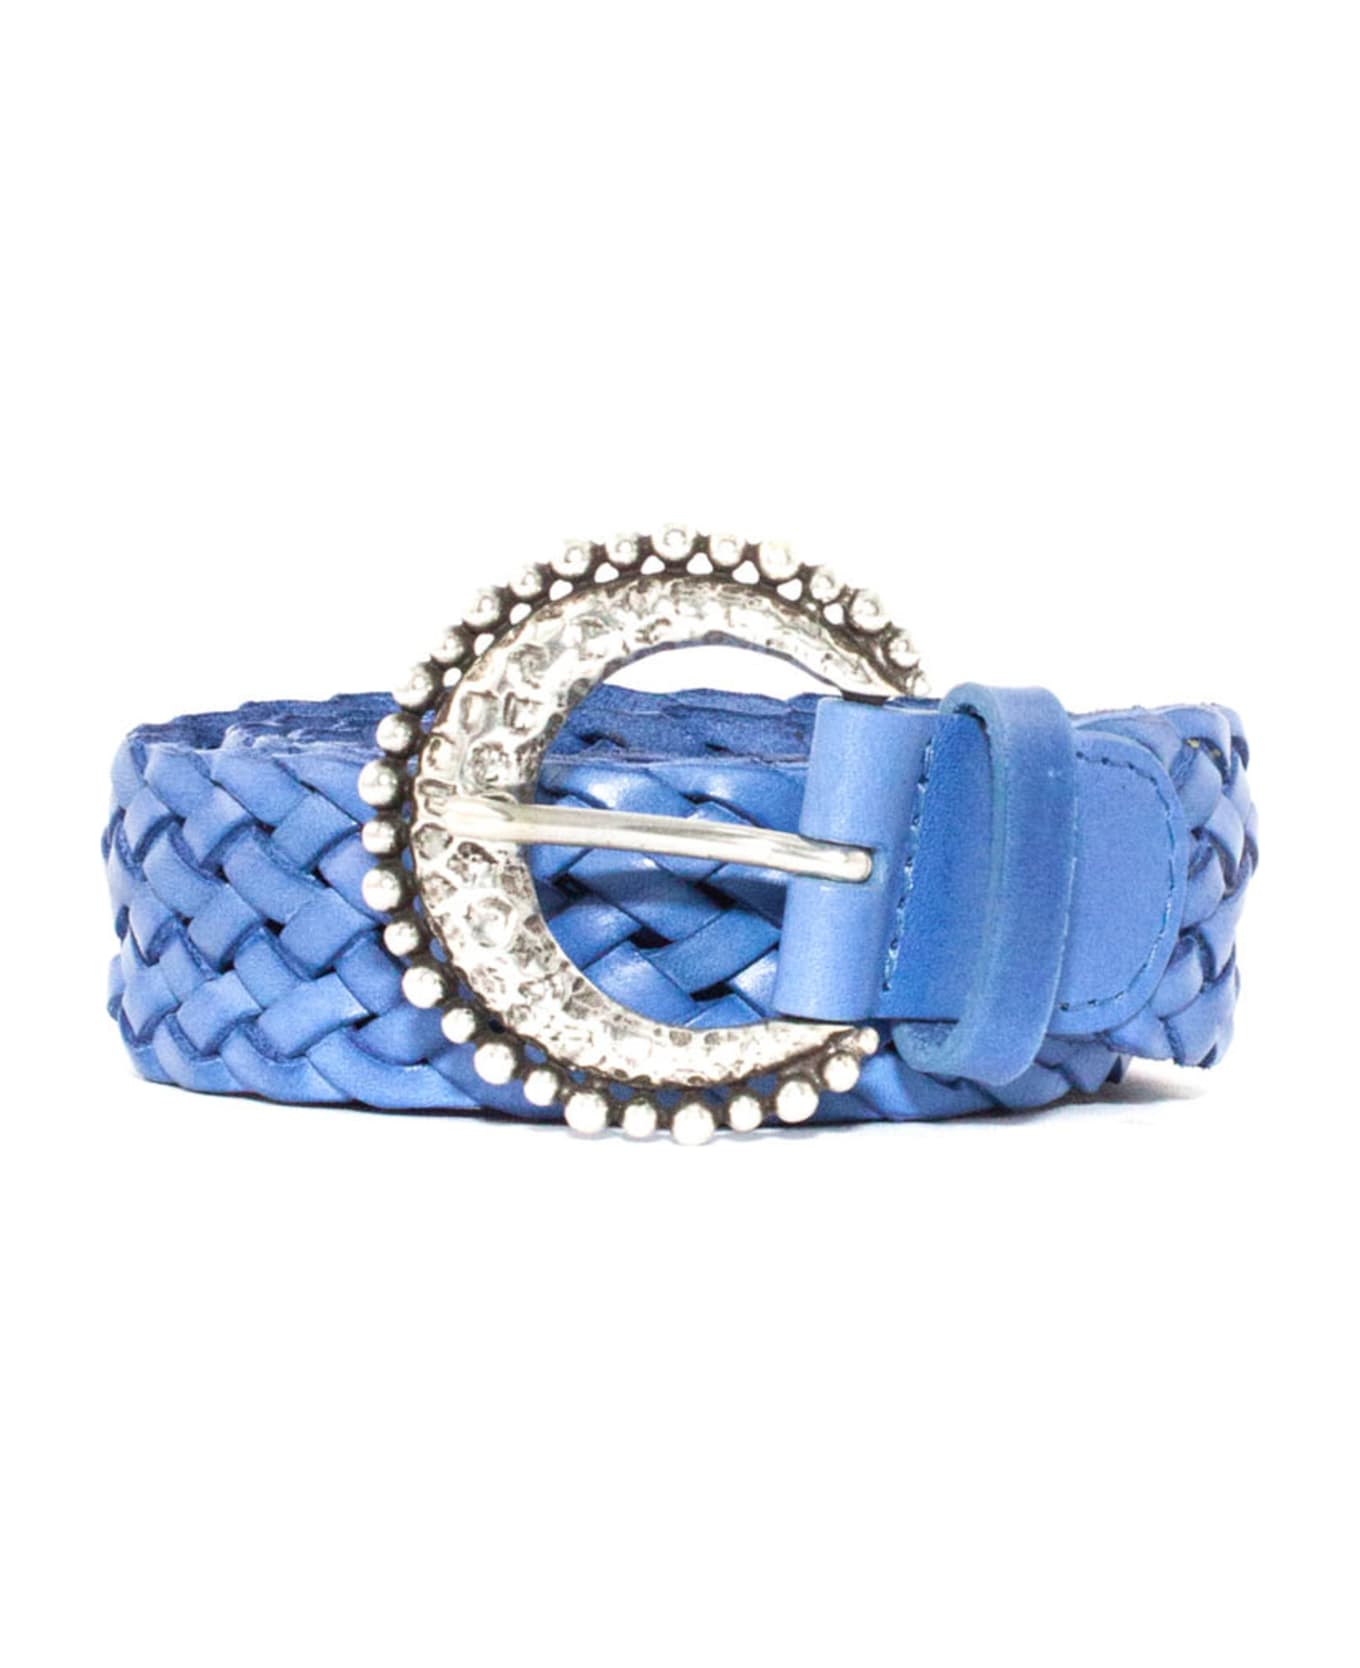 Orciani Braided Leather Belt - Blue